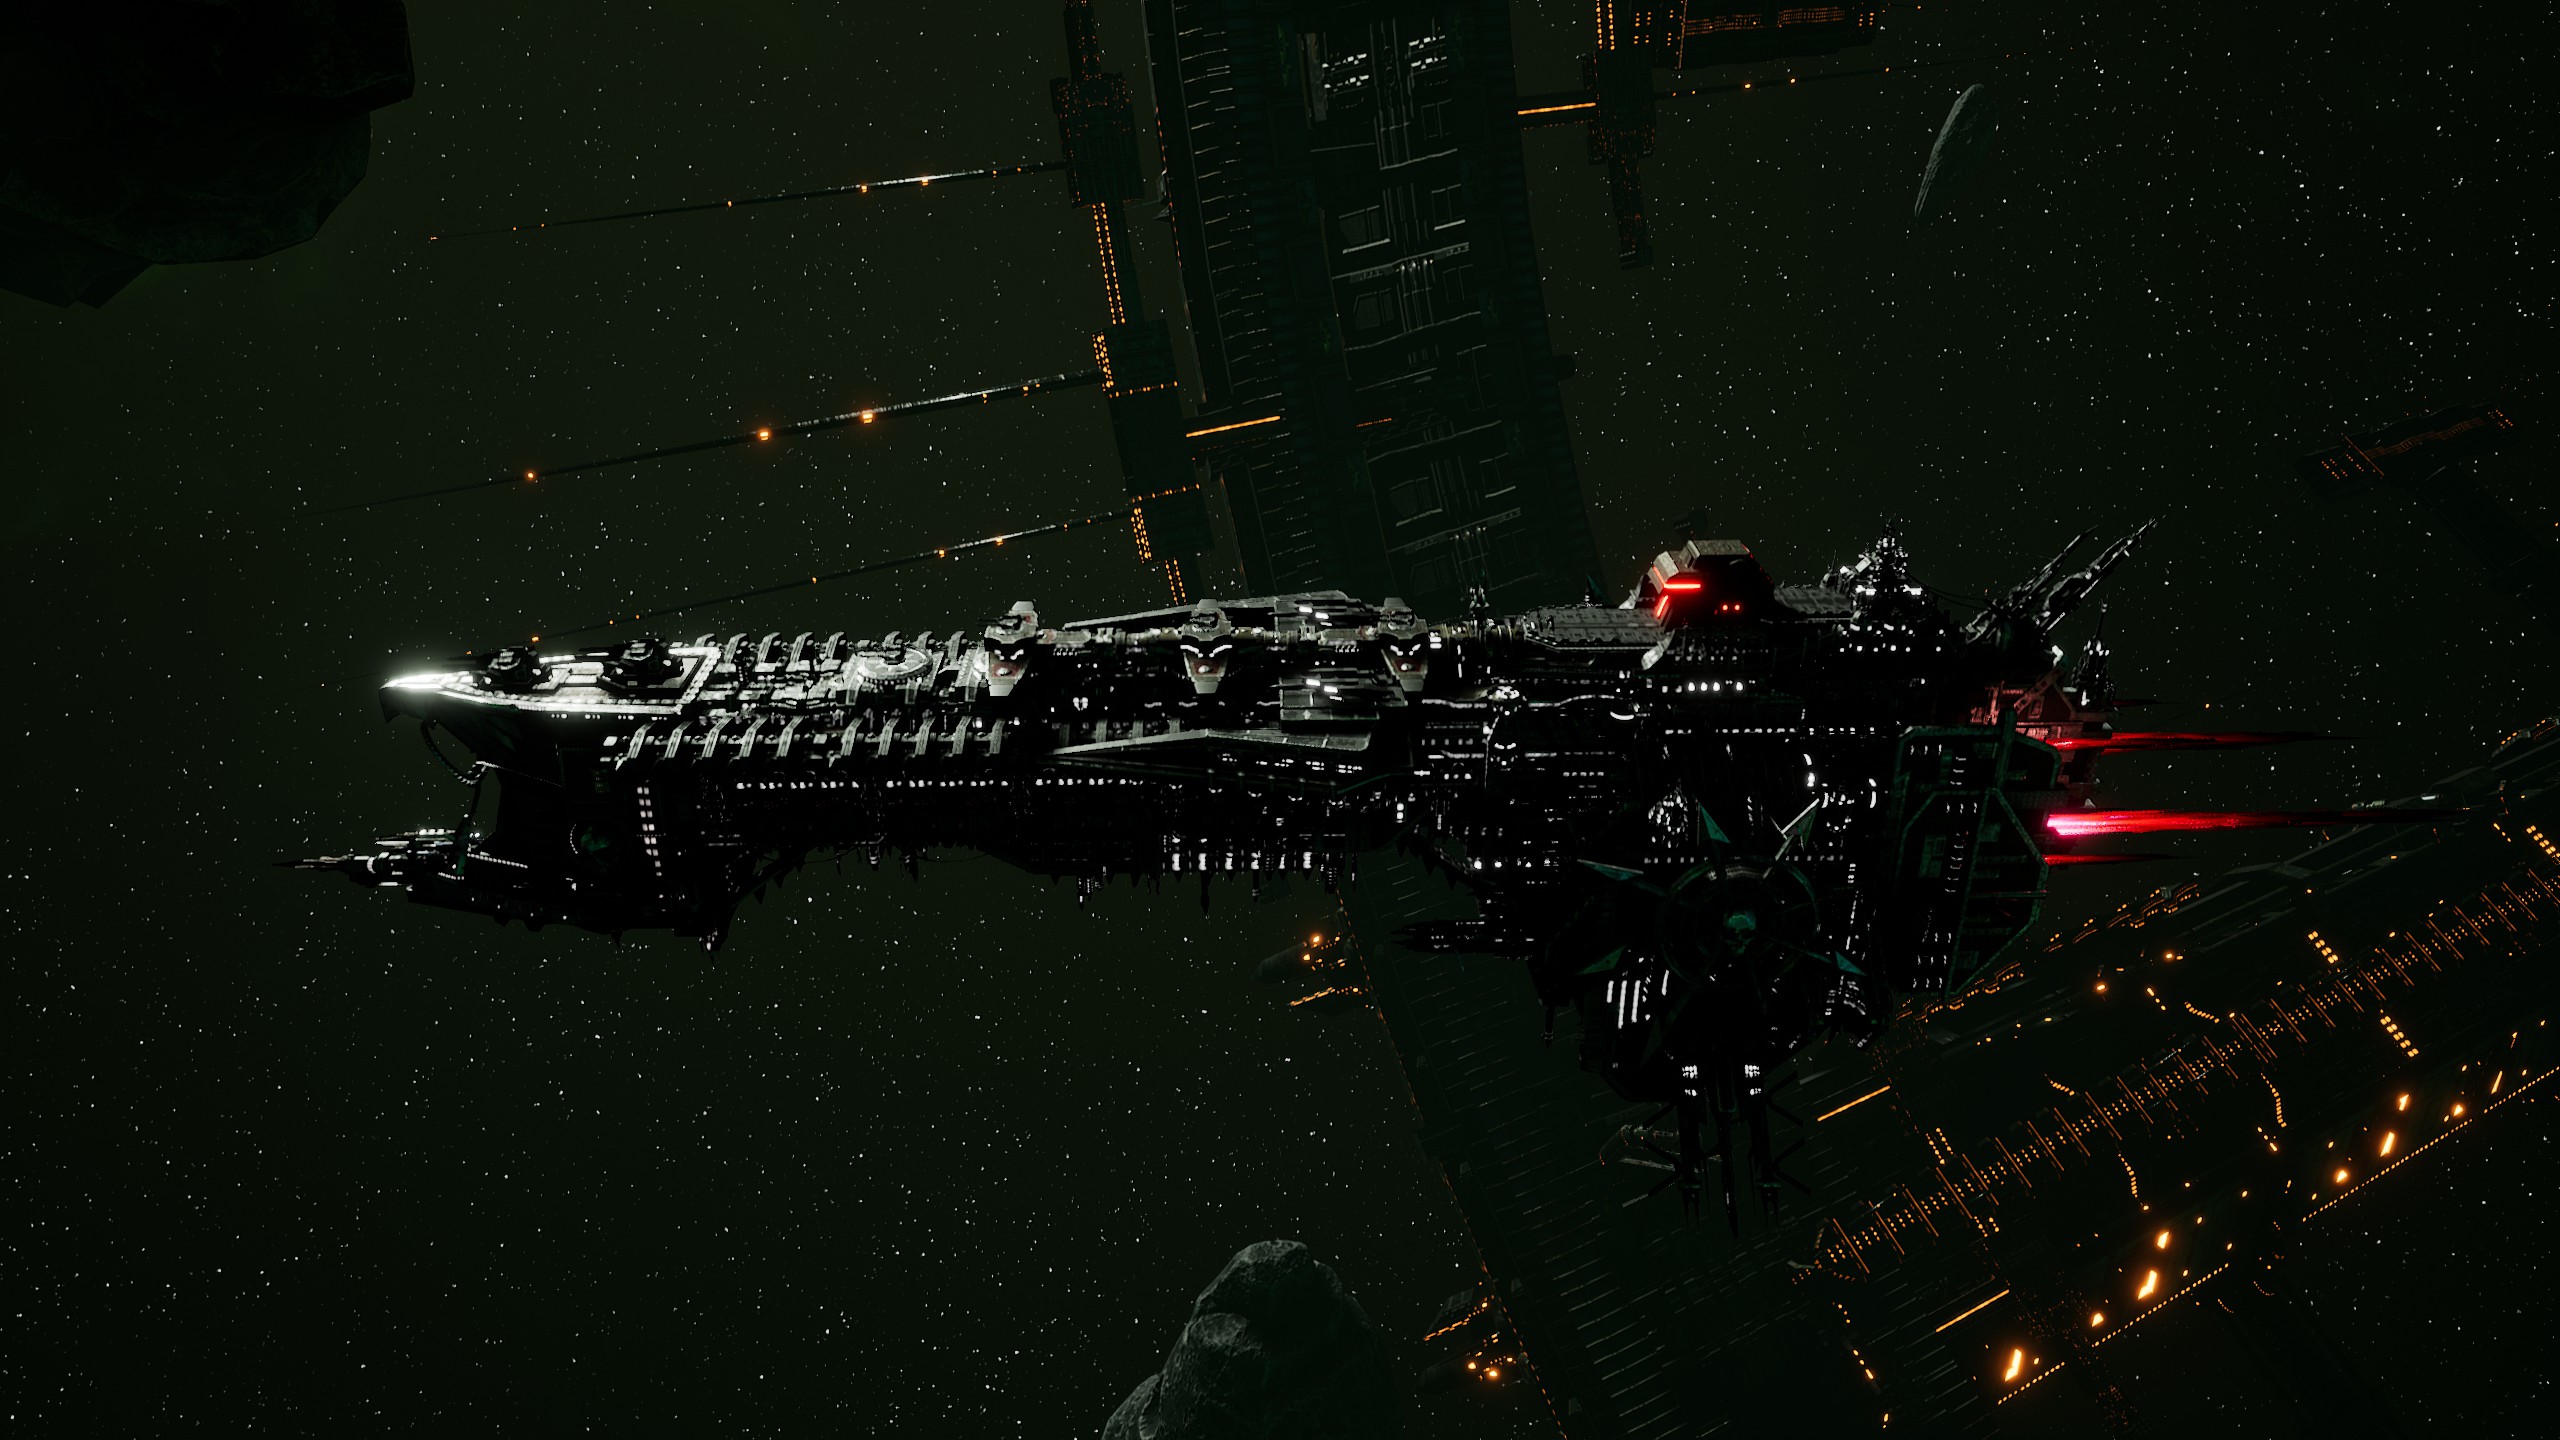 The Iron Blood An Iron Warriors Gloriana Class Titan Image Skalgrim Mod For Battlefleet Gothic Armada 2 Mod Db